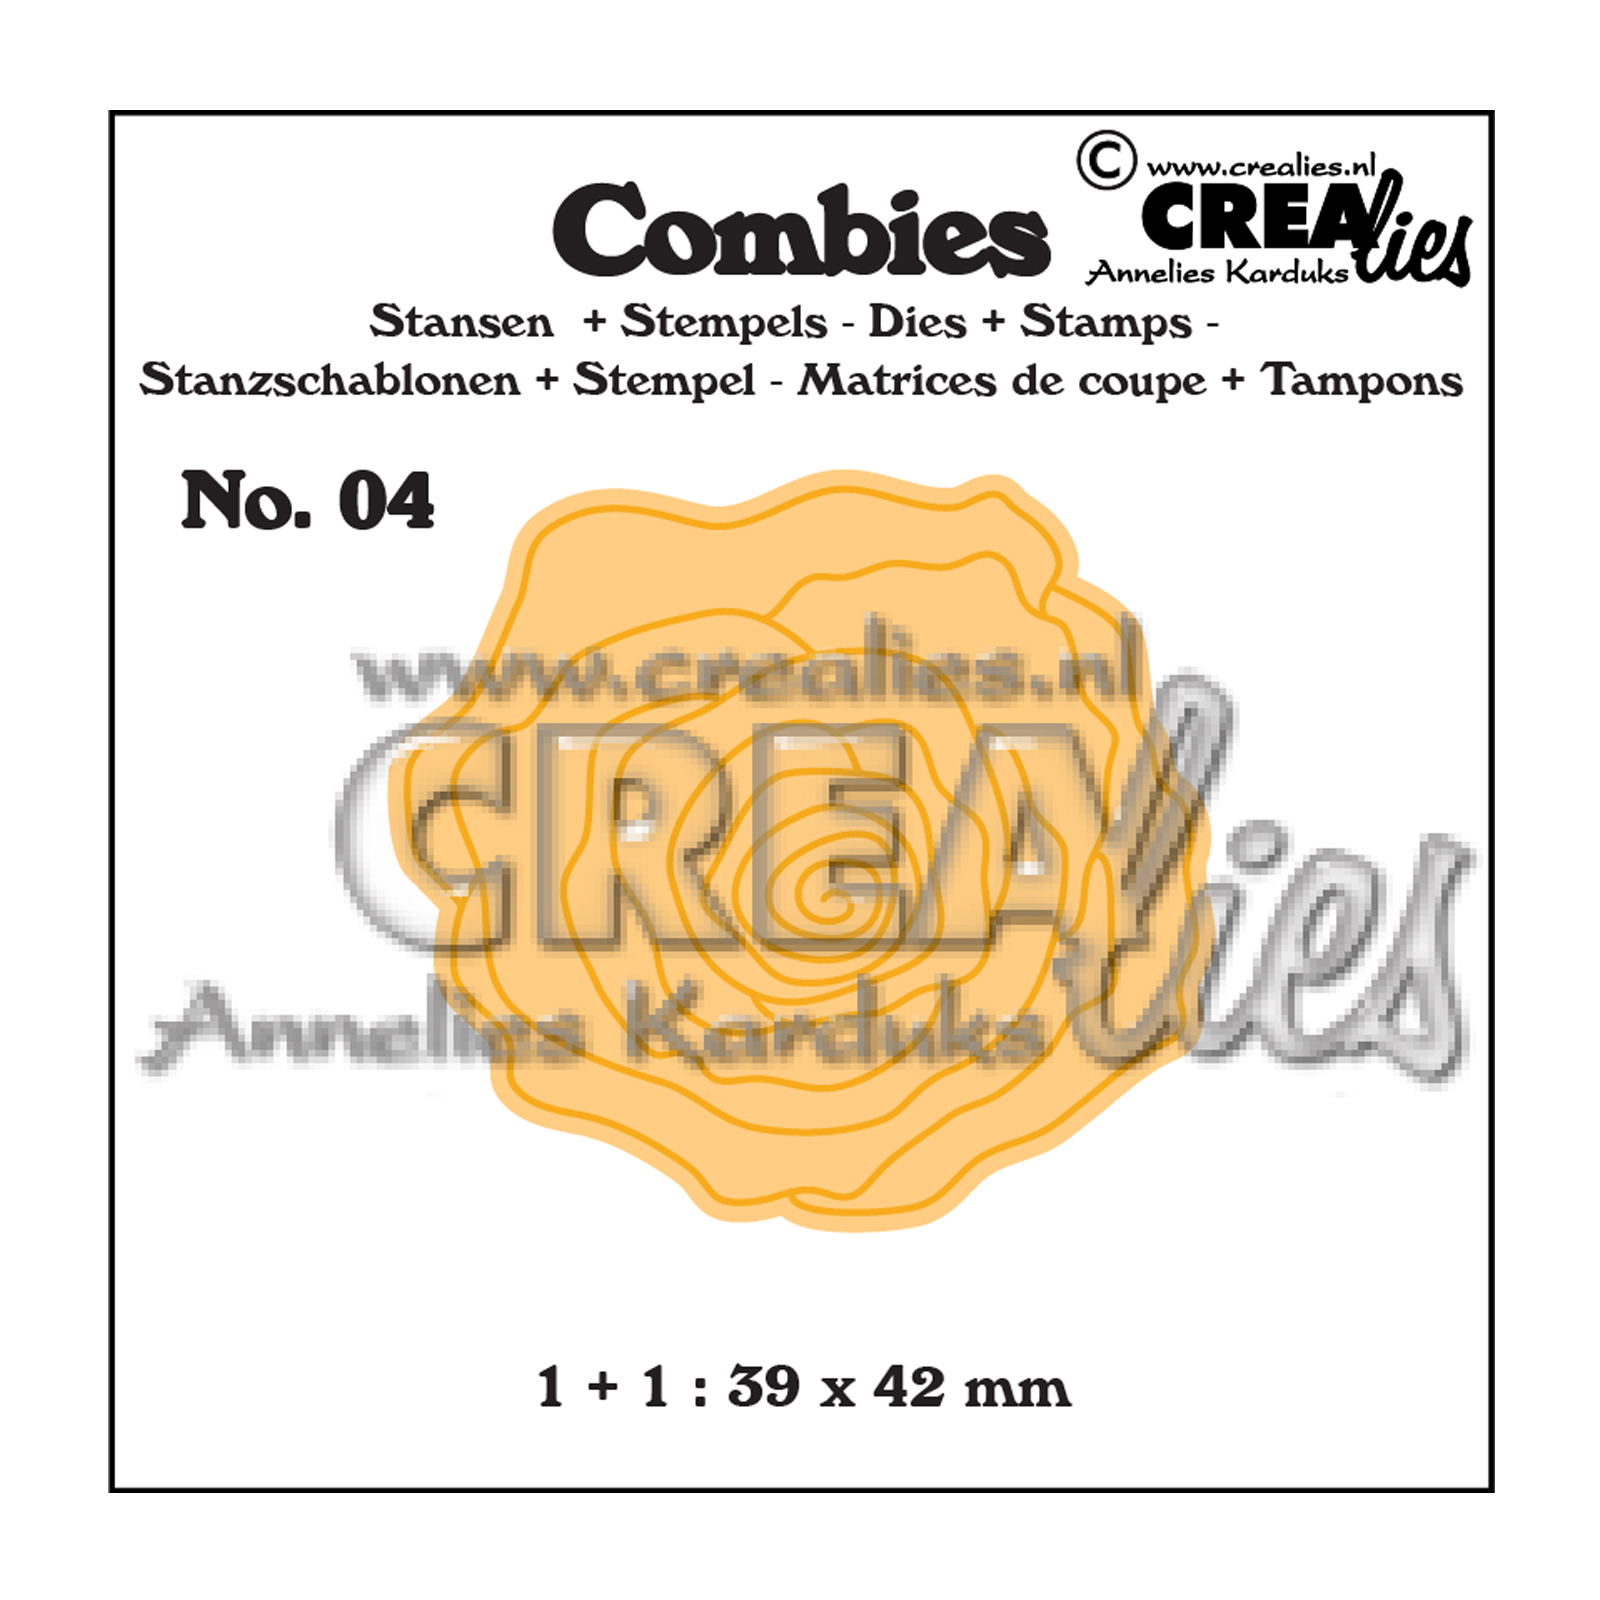 Crealies • Combies plantilla de corte & sello set no.04 Roses